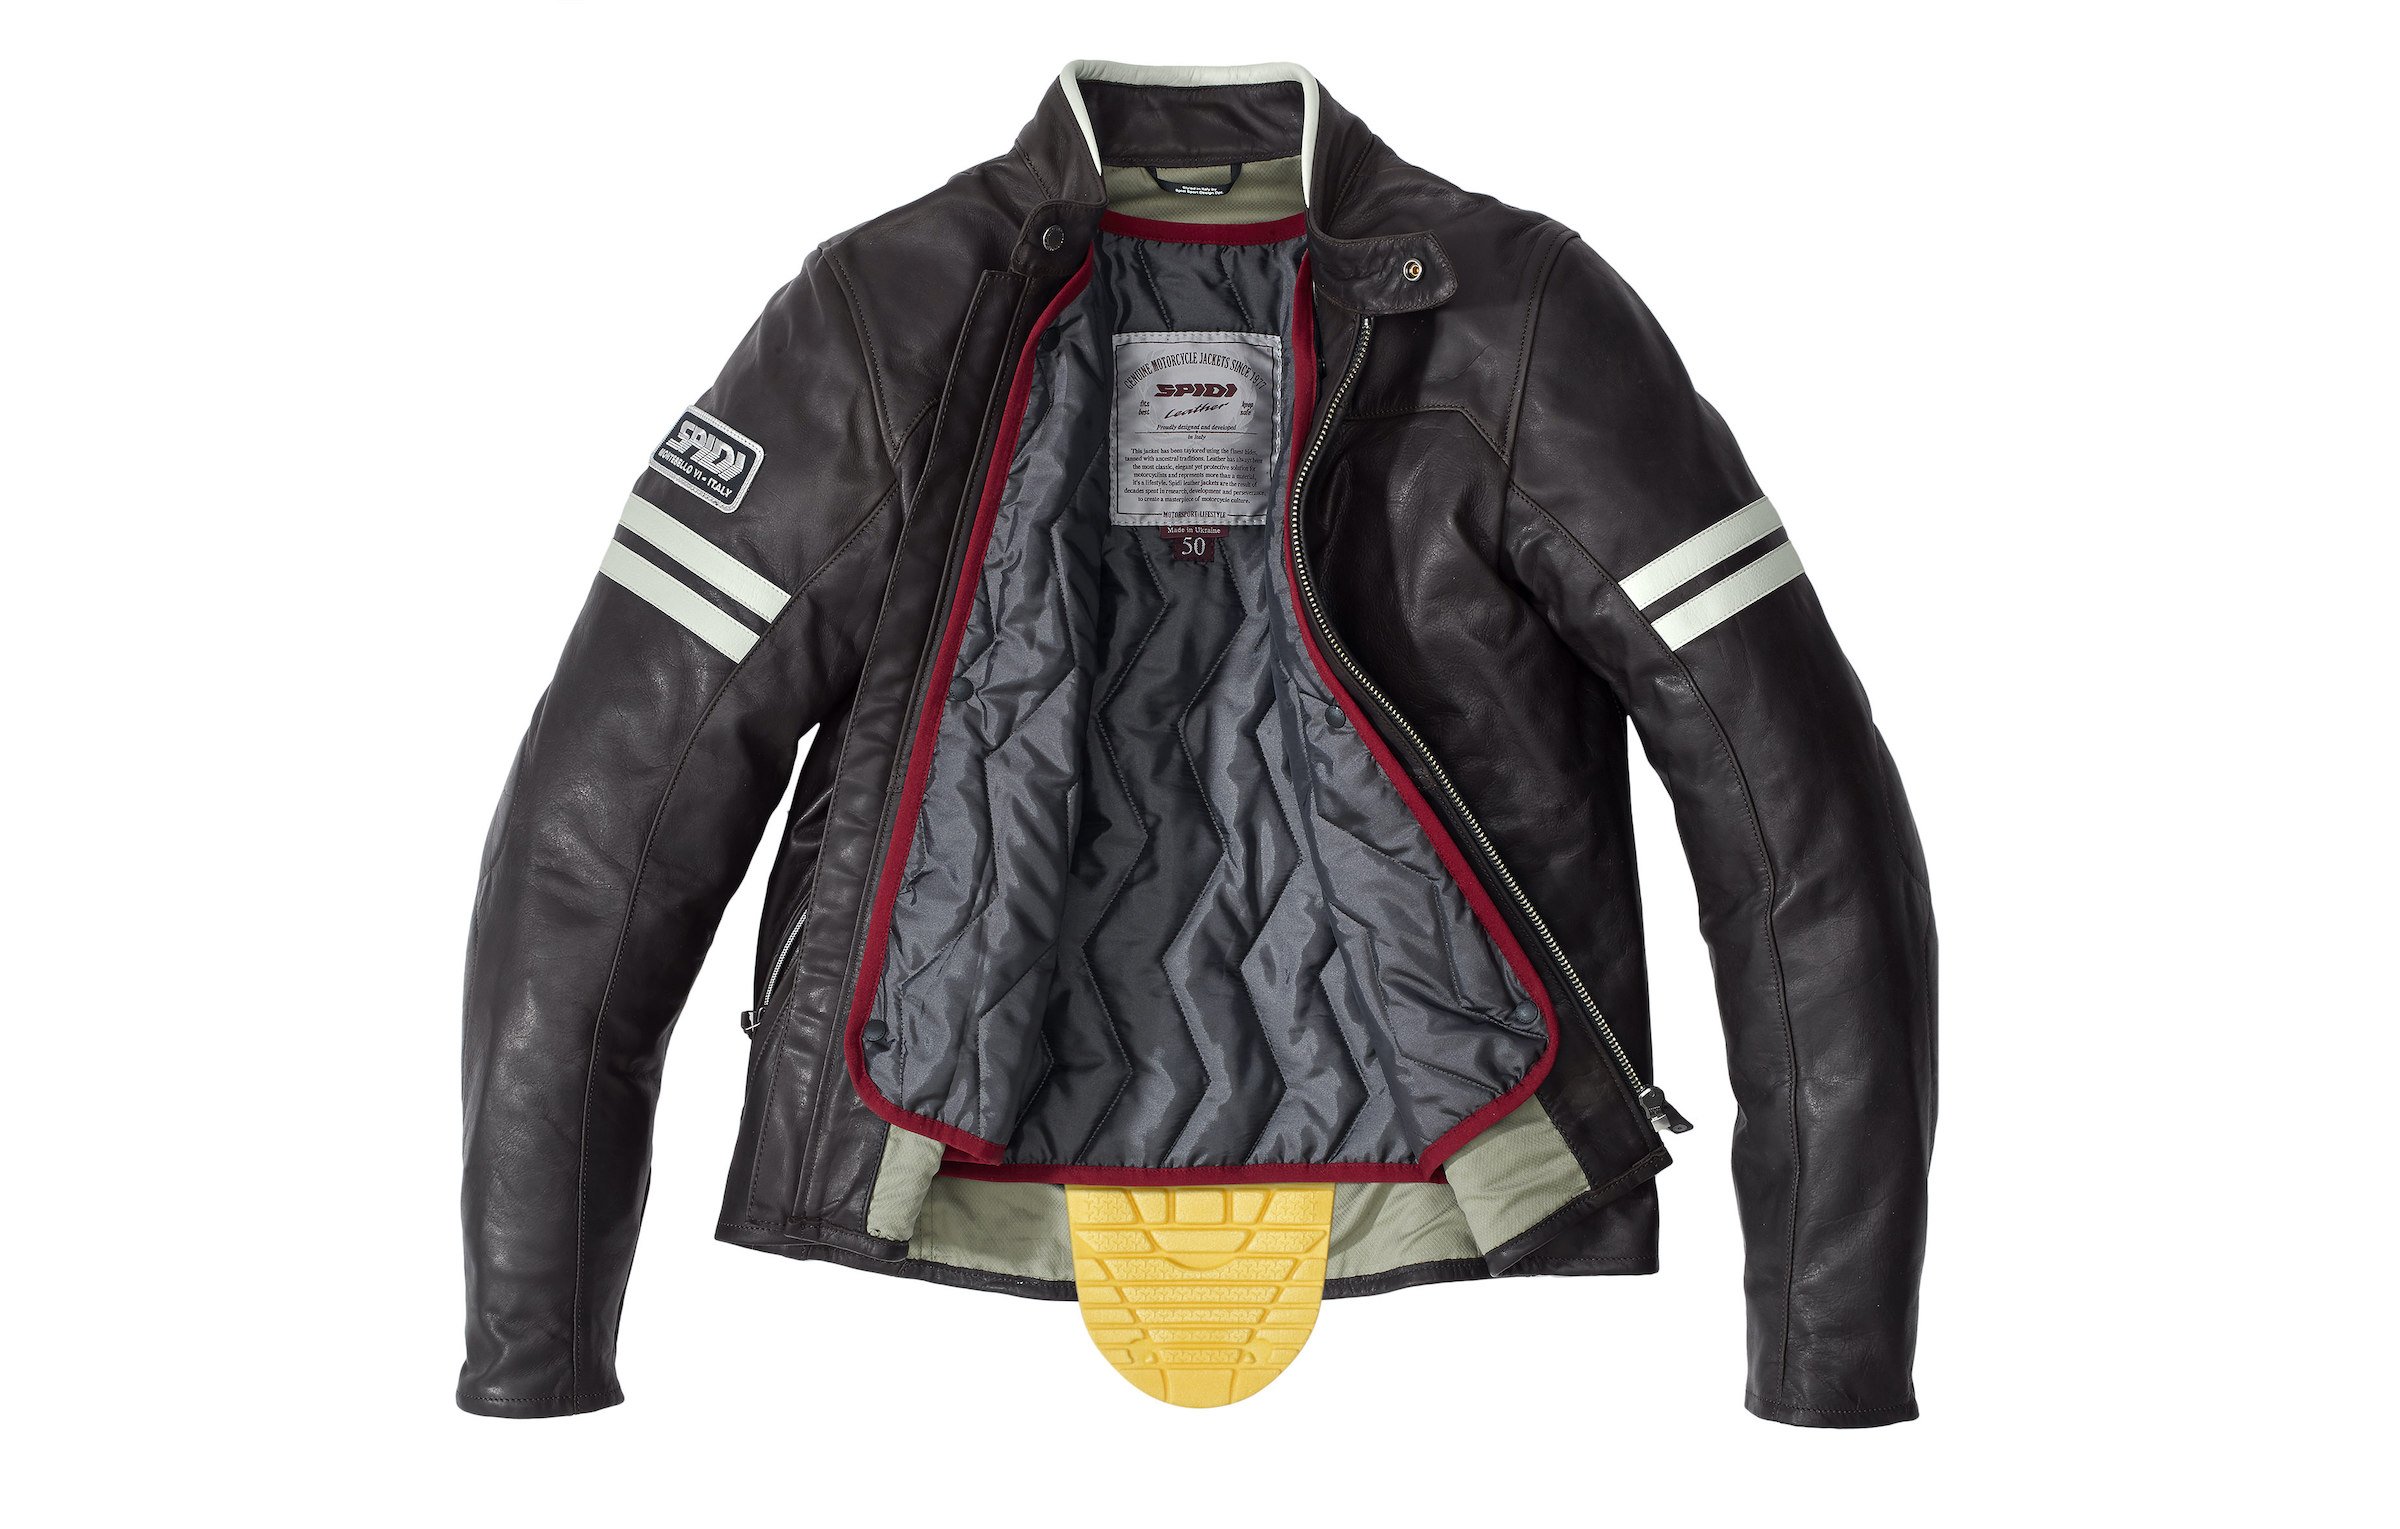 The Spidi Vintage Leather Jacket - A Timeless Italian Motorcycle Jacket